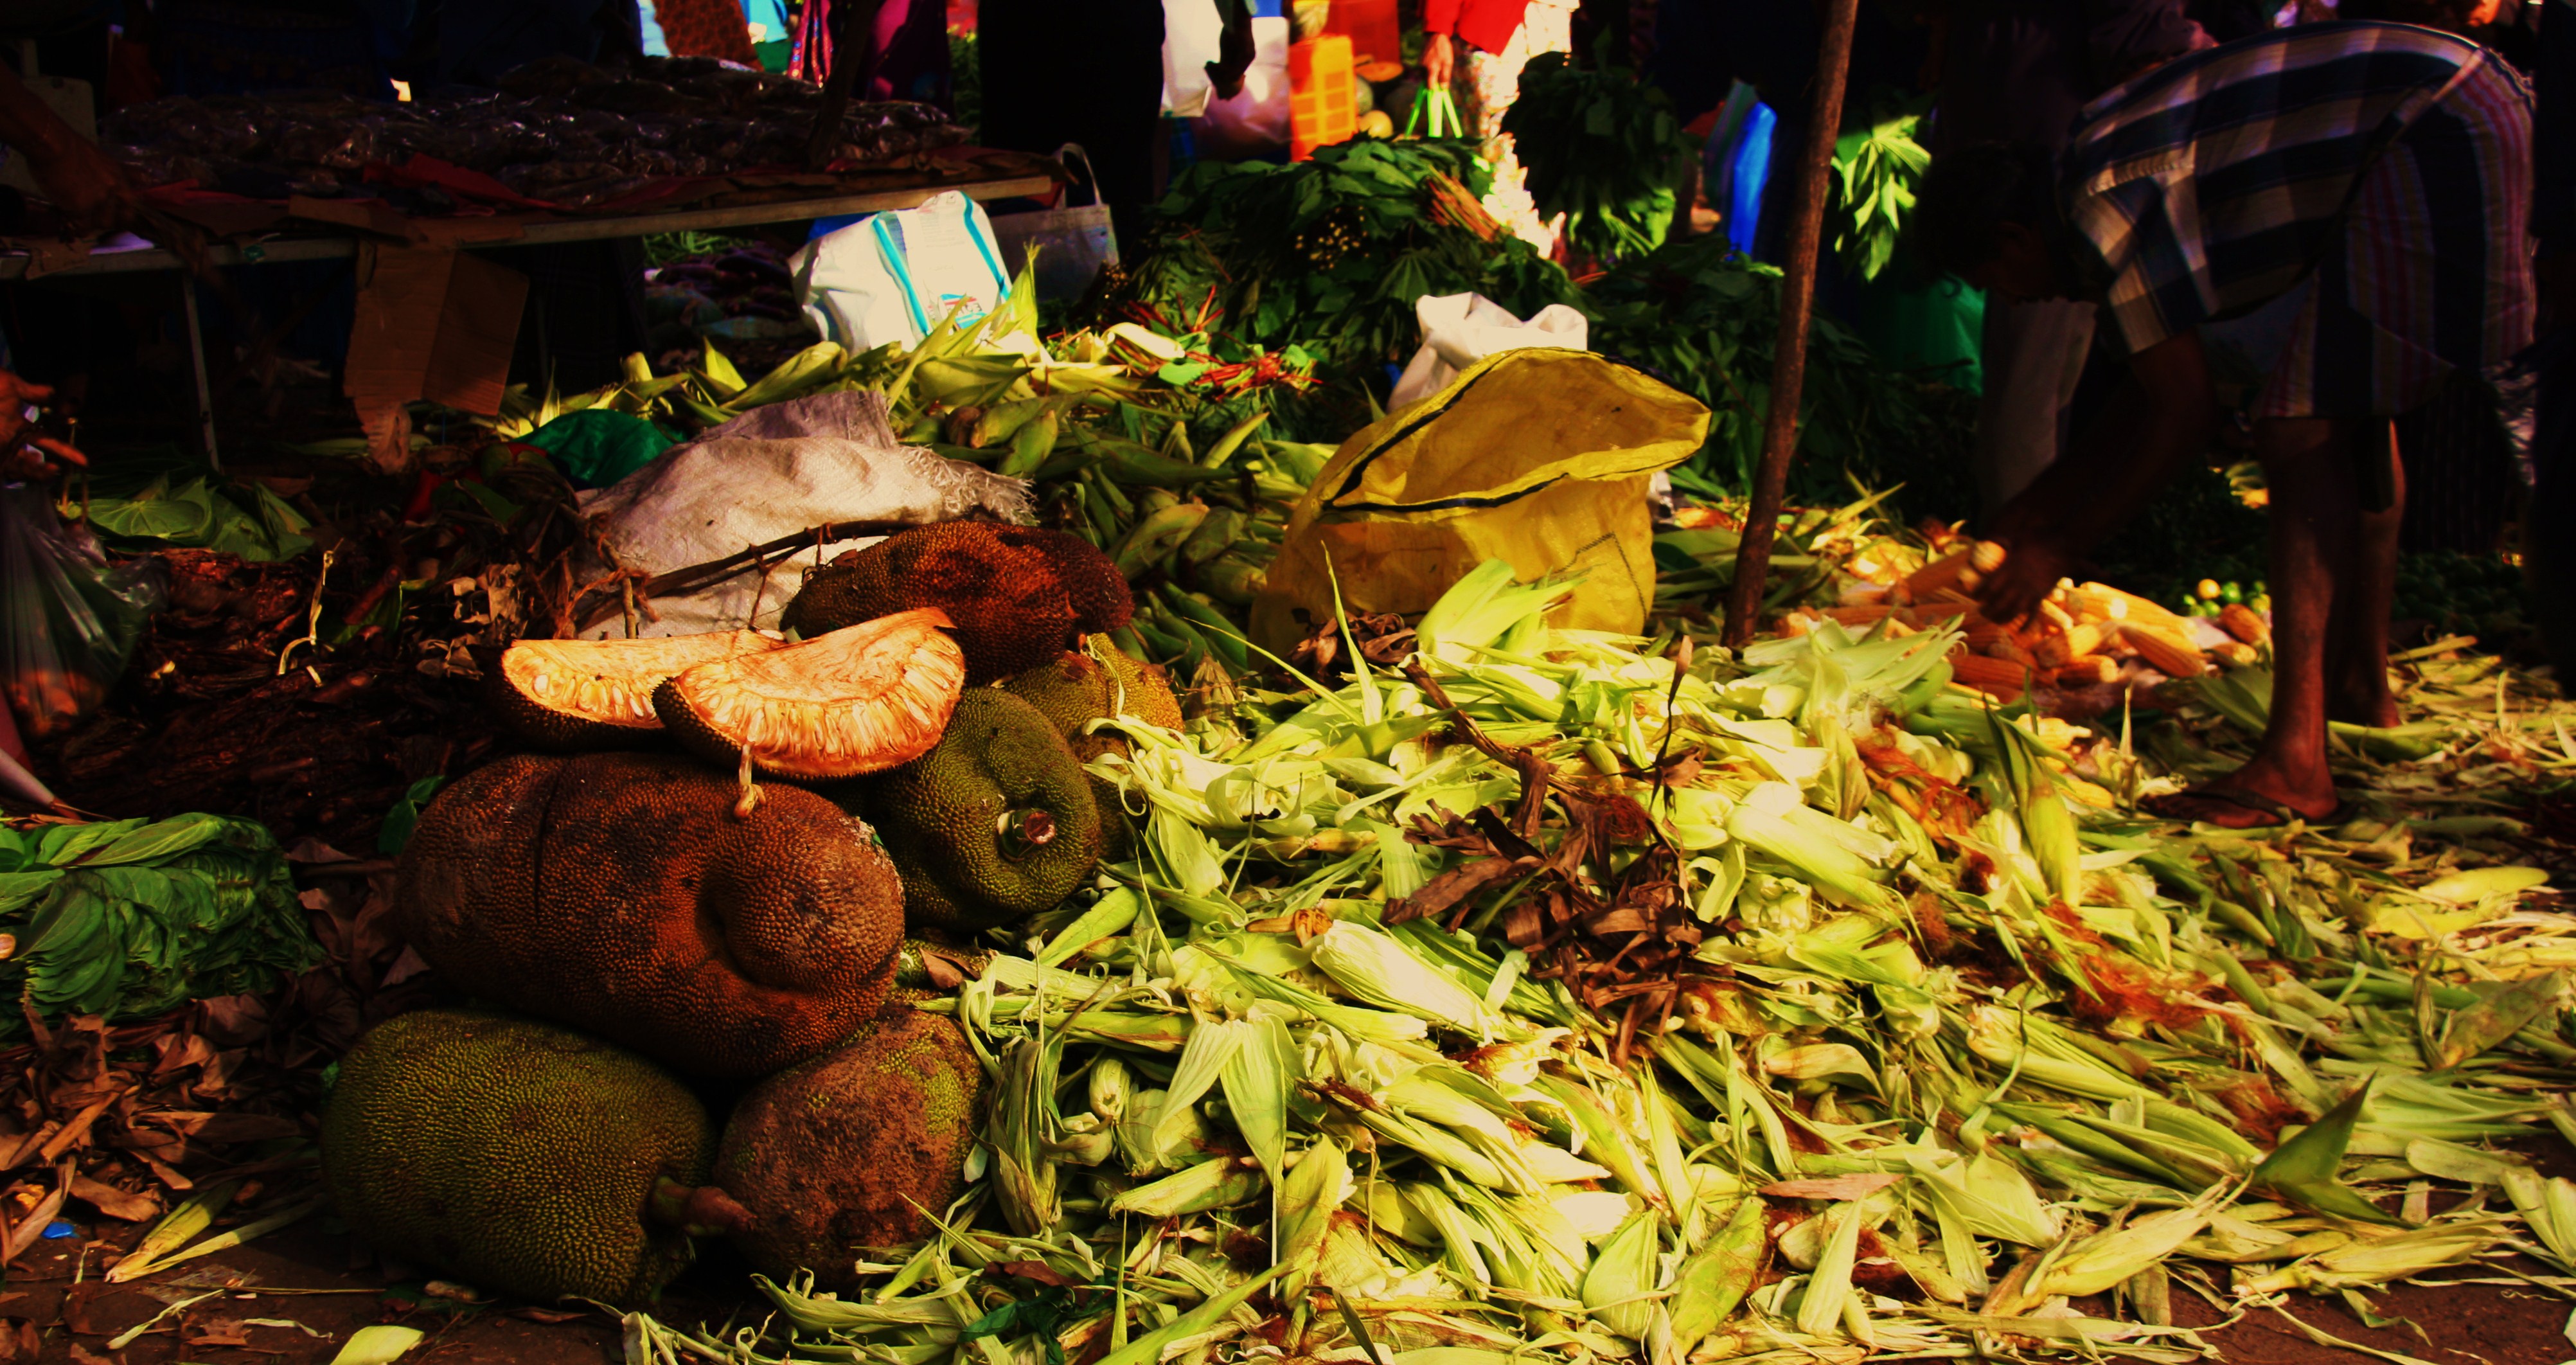 Sri Lanka 2012 - Fruit stall at the market